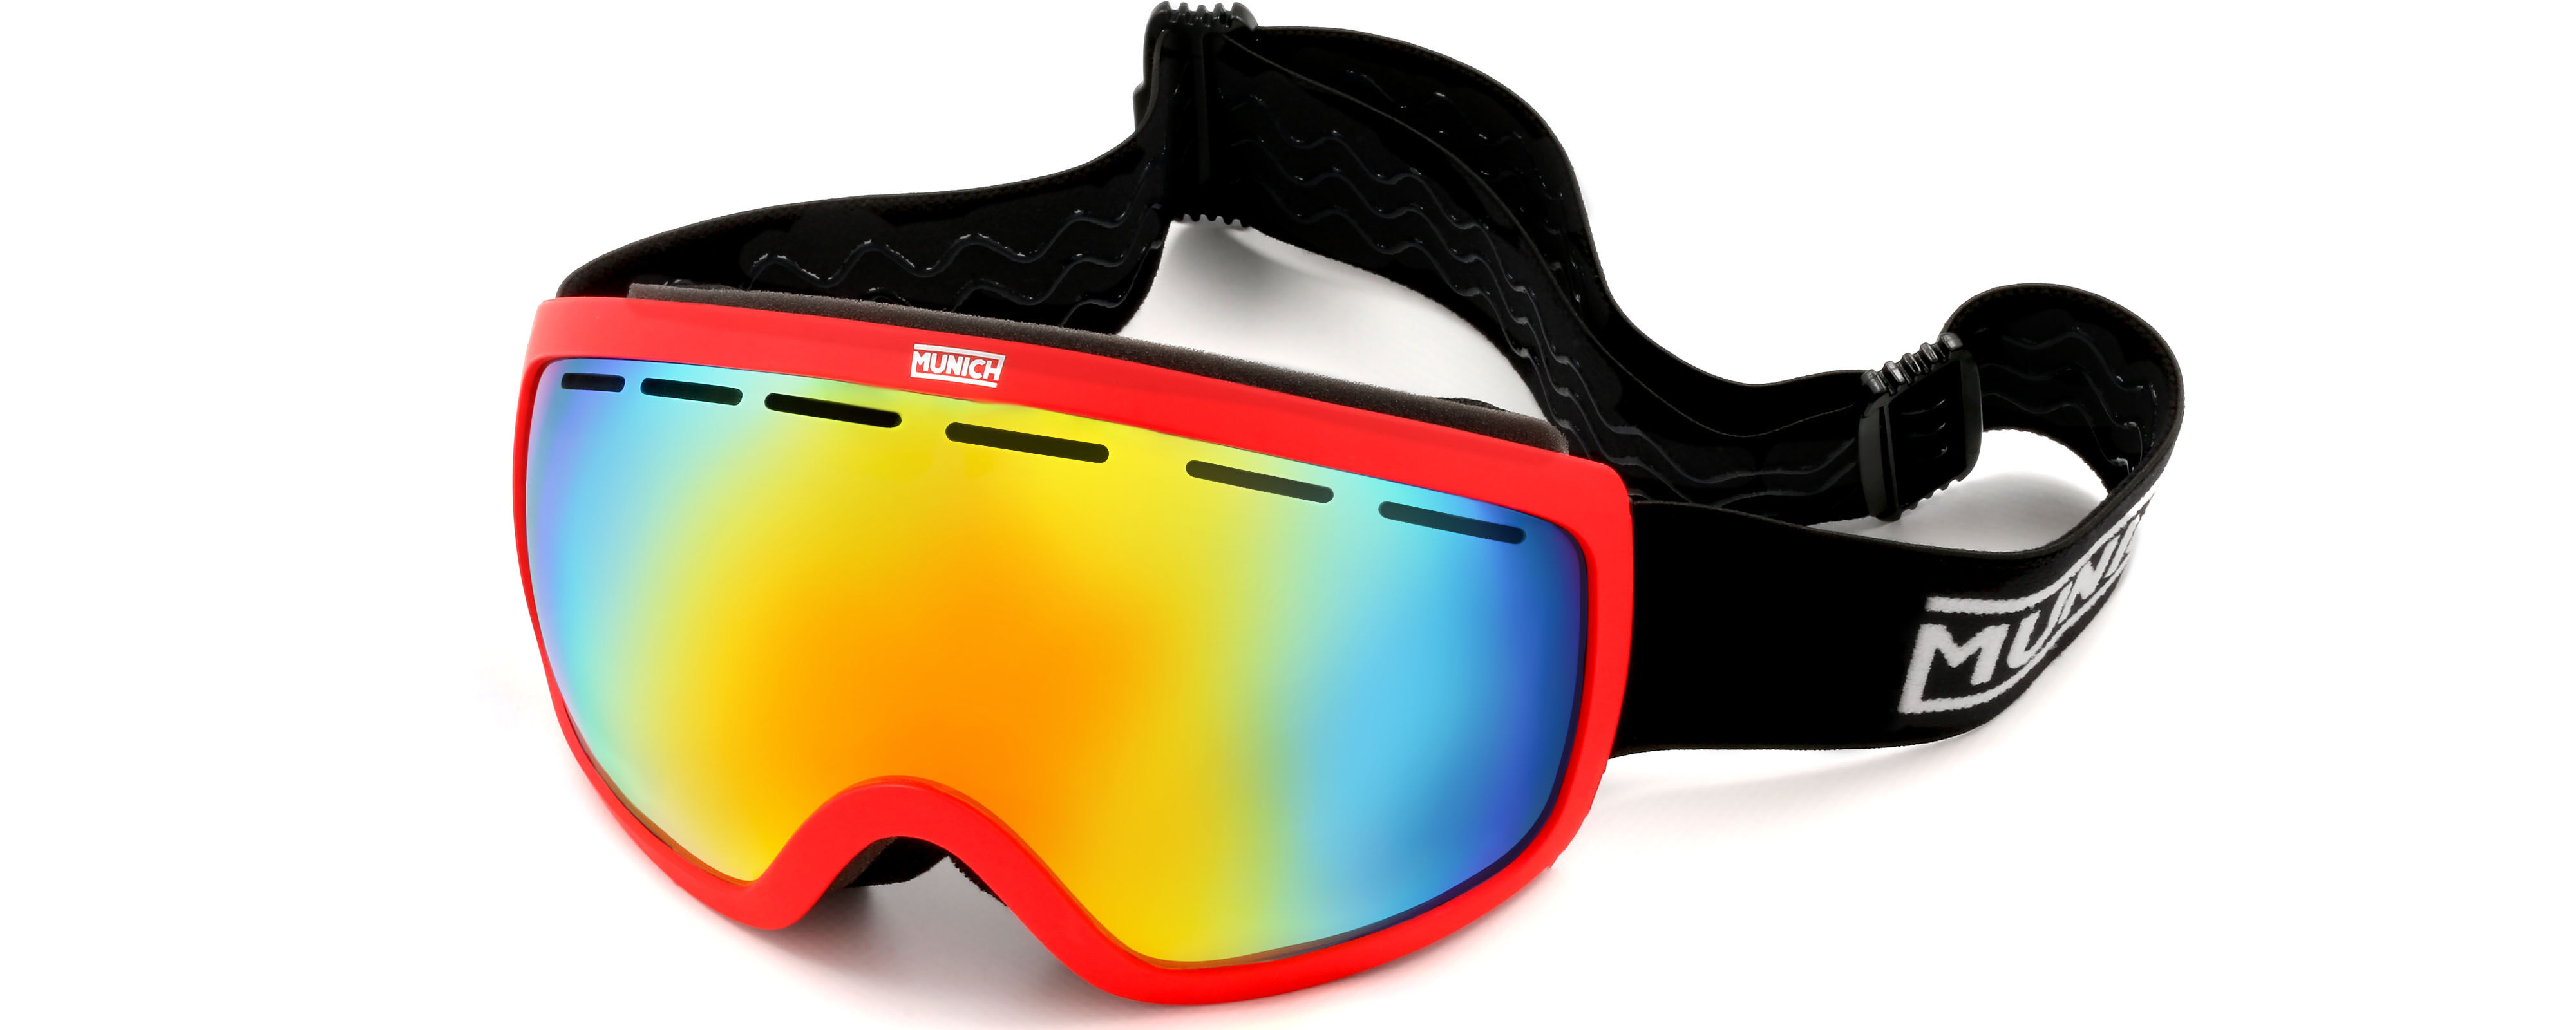 Mascara Ski Munich 27 C02 Gafas De Sol Rojo